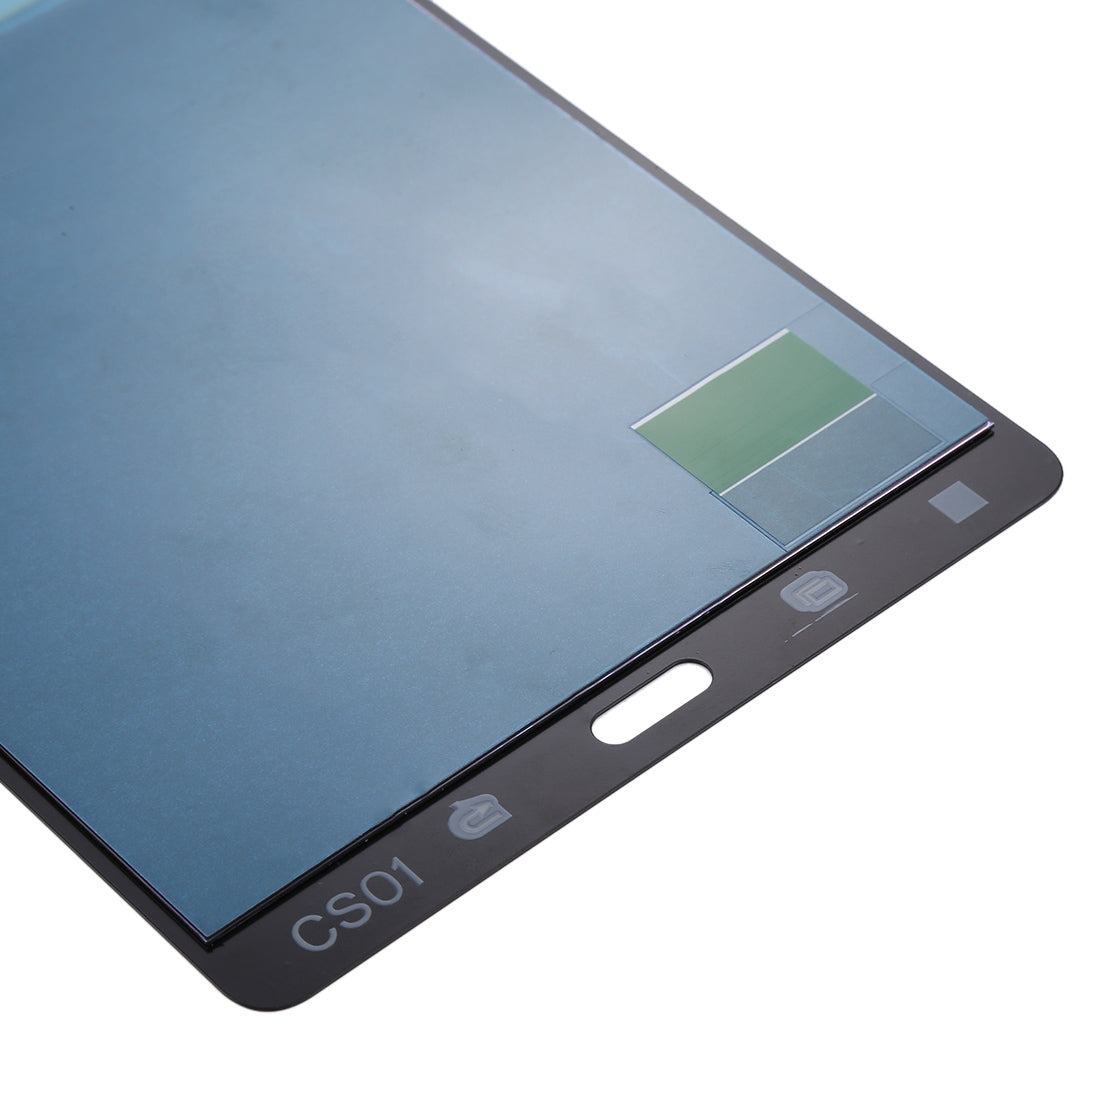 Pantalla LCD + Tactil Digitalizador Samsung Galaxy Tab S 8.4 LTE T705 Negro